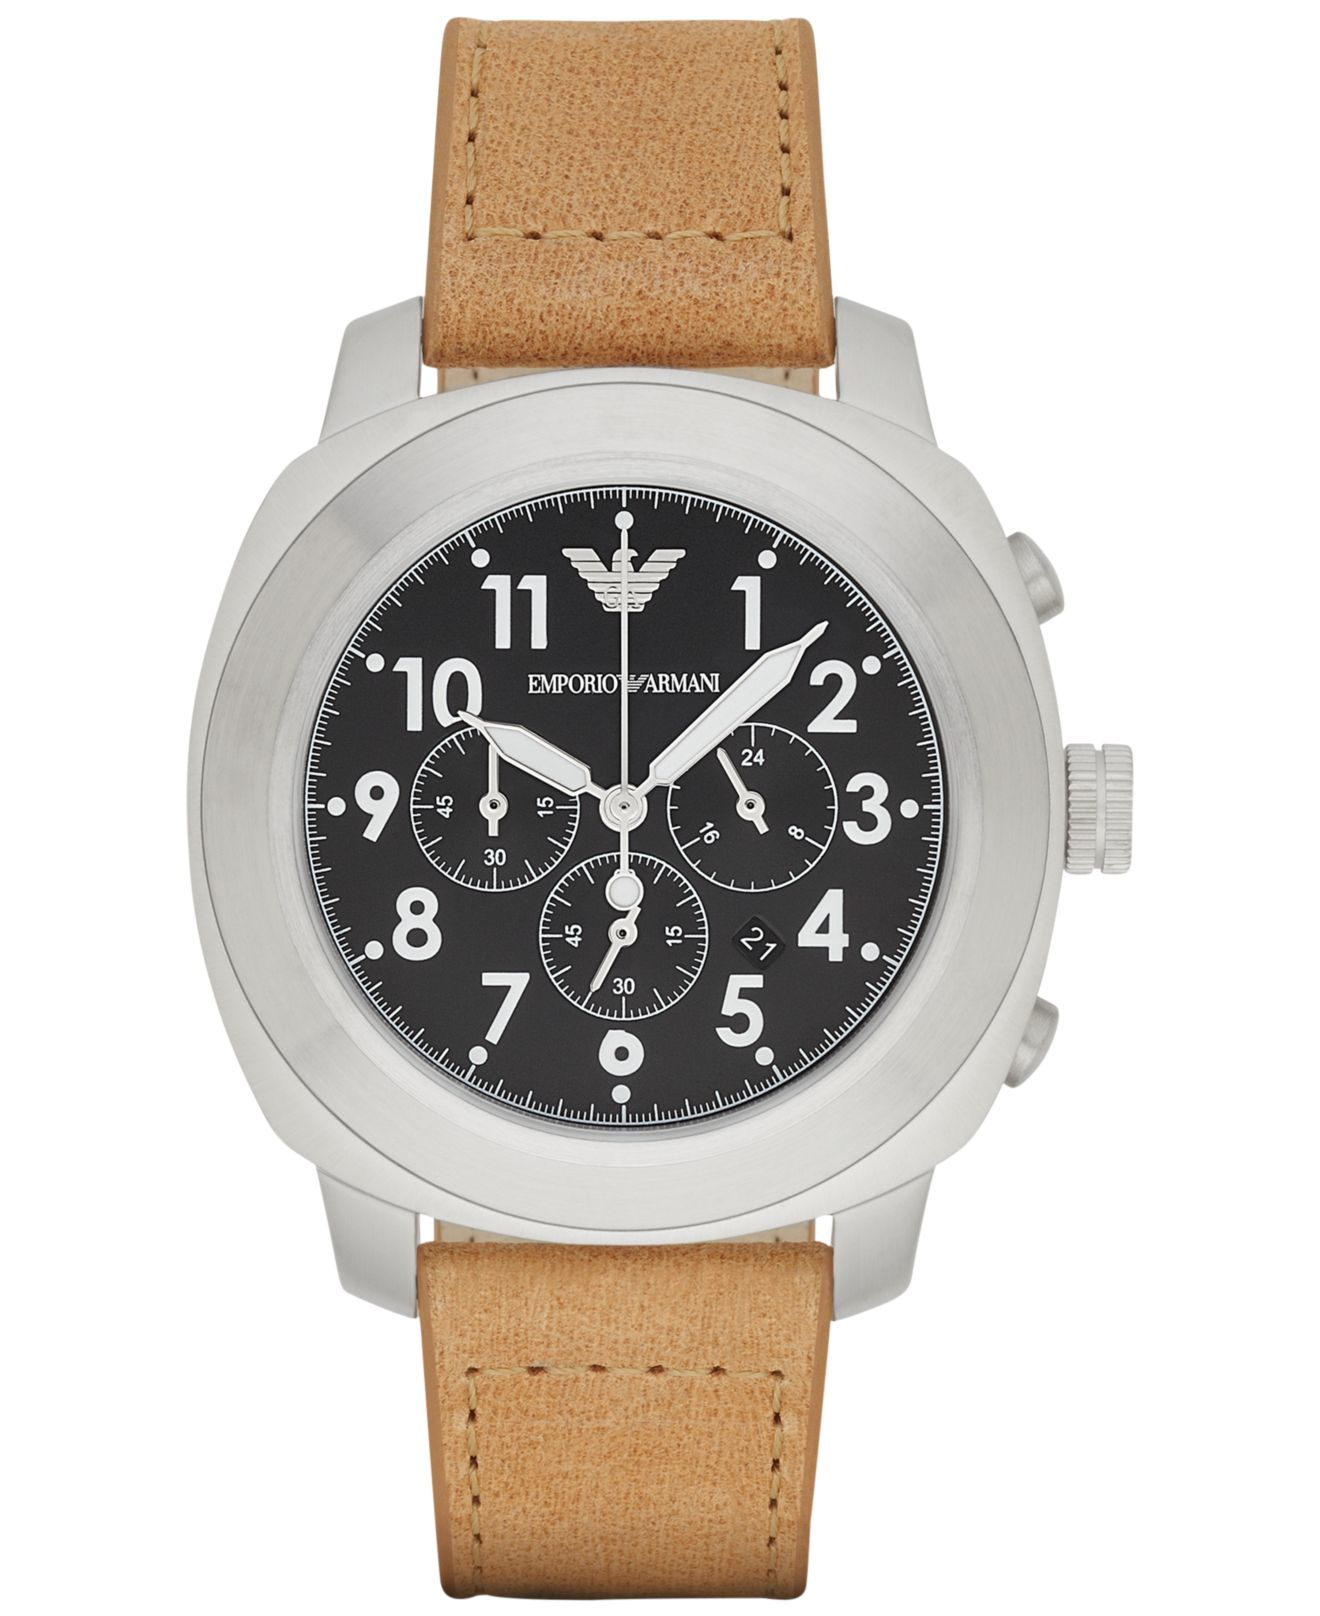 Lyst - Emporio Armani Men's Chronograph Light Brown Leather Strap Watch ...